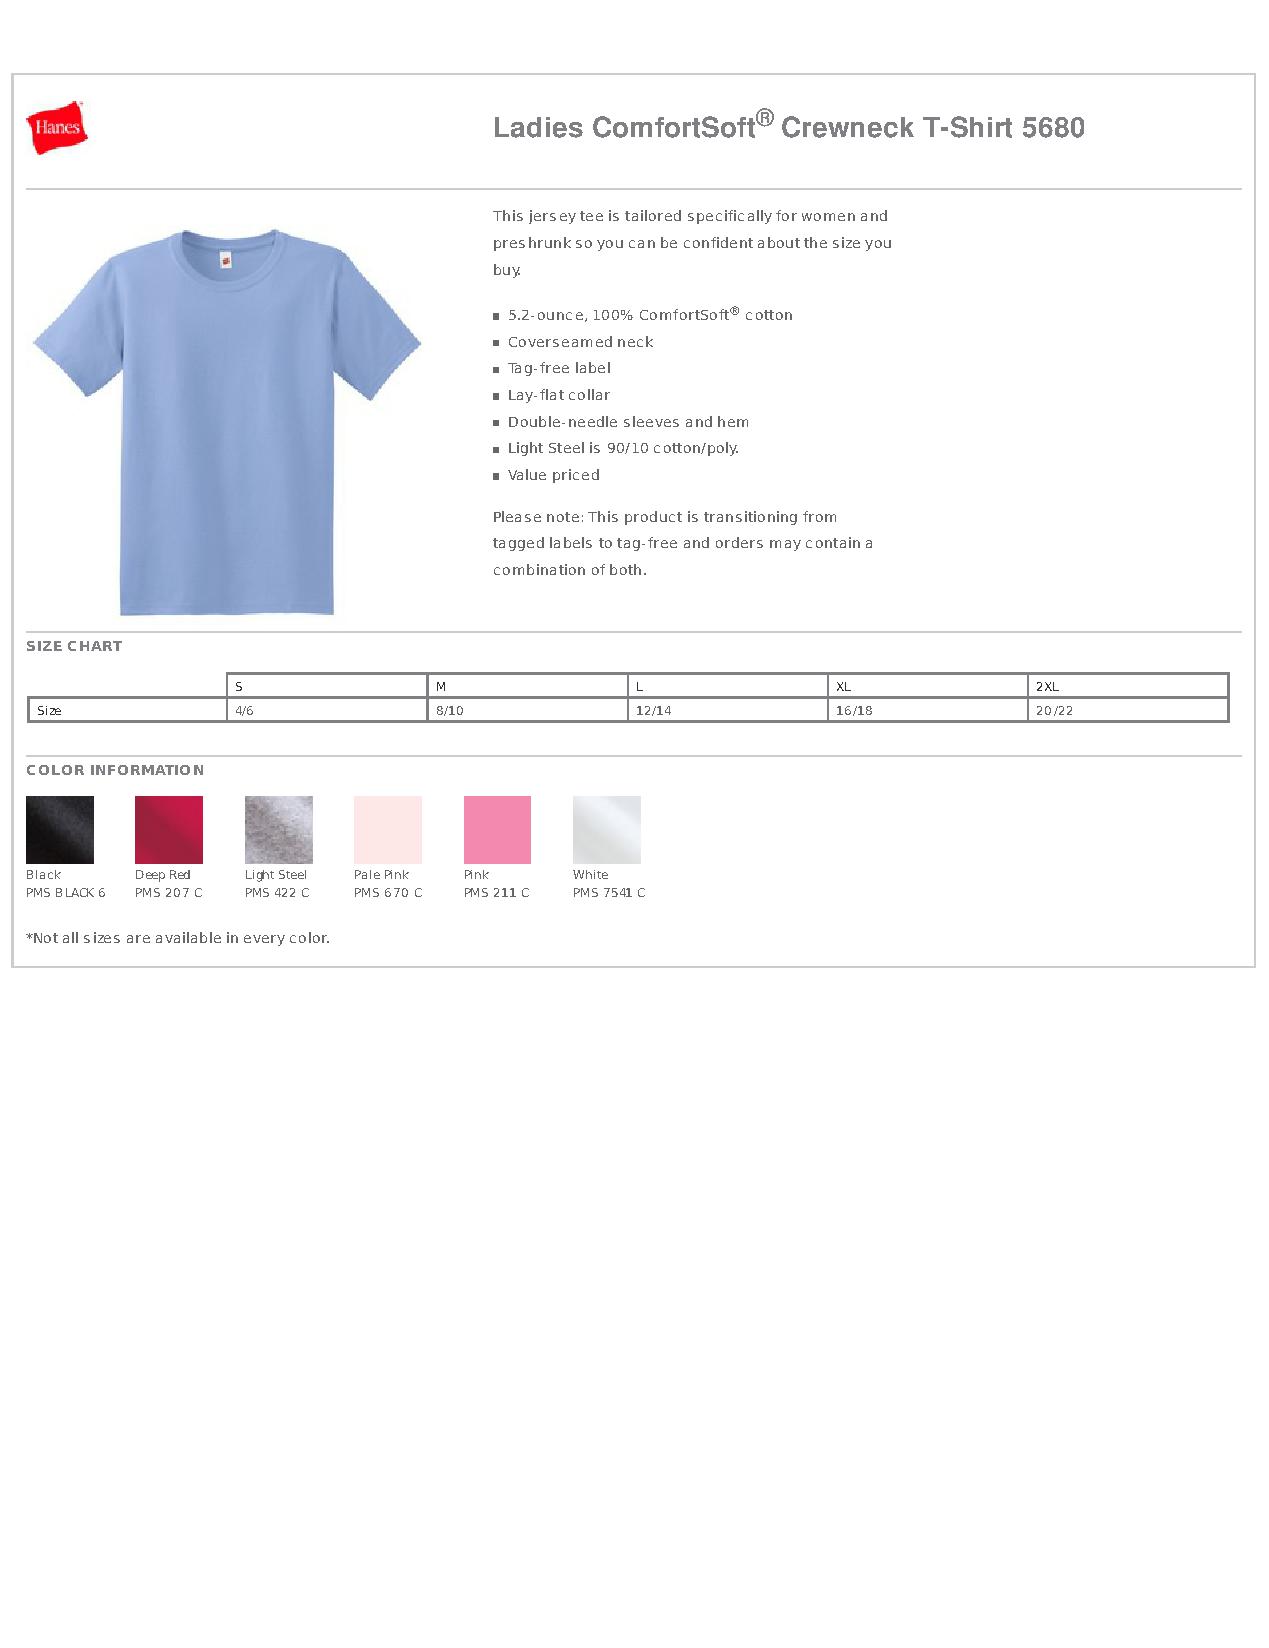 Hanes Heavyweight T Shirt Size Chart